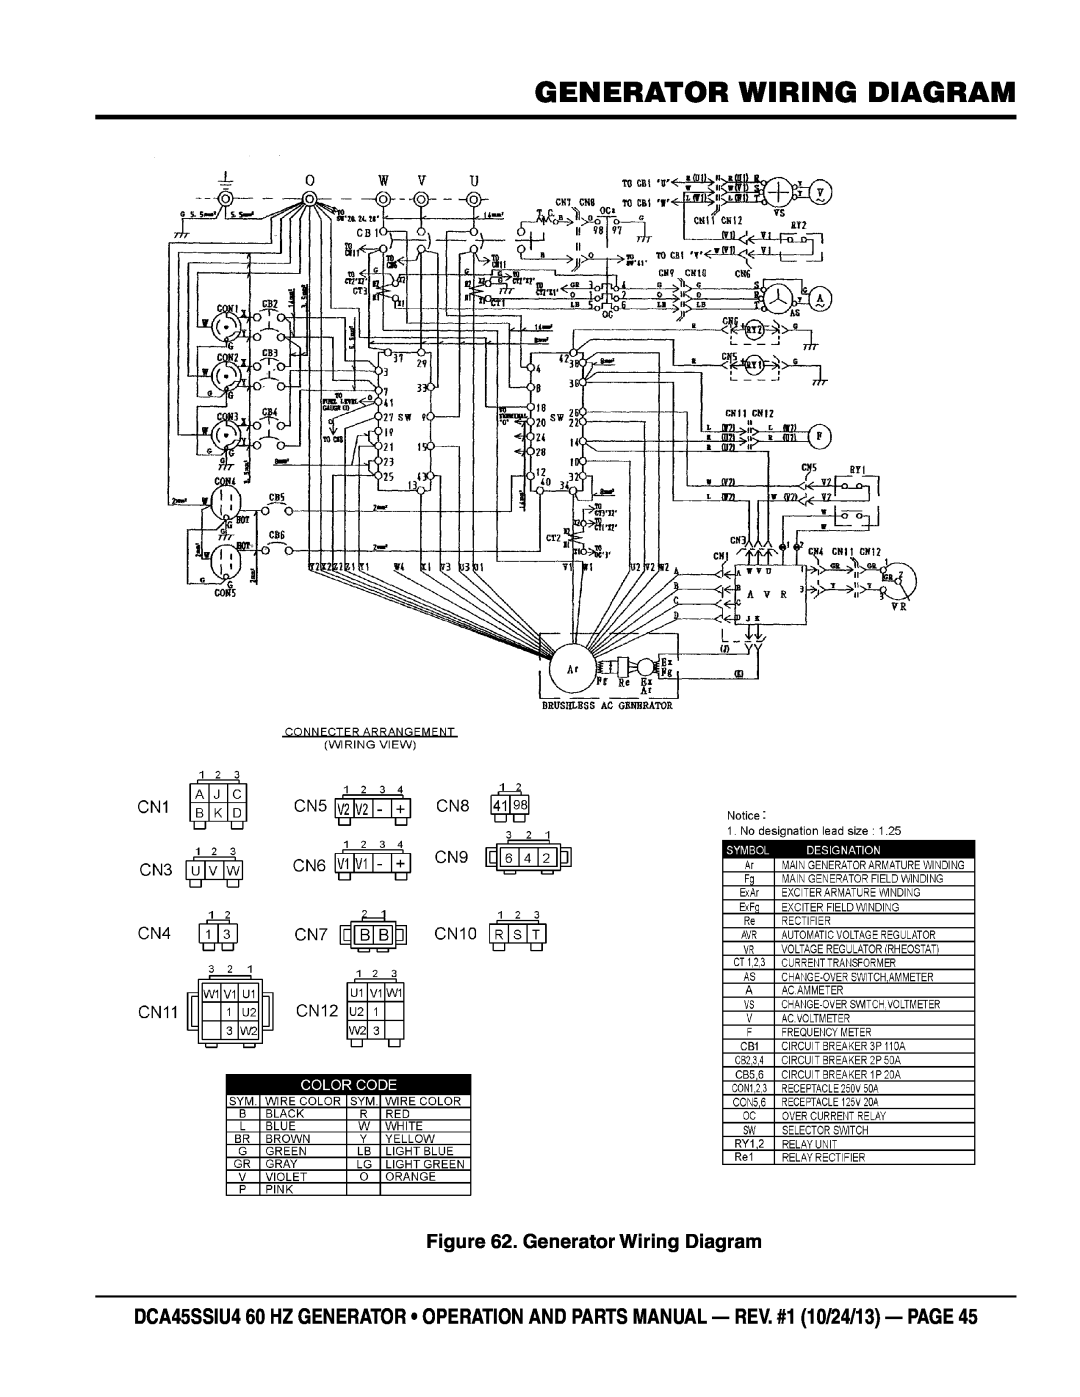 Multiquip dca45ssiu4 manual Generator Wiring Diagram 